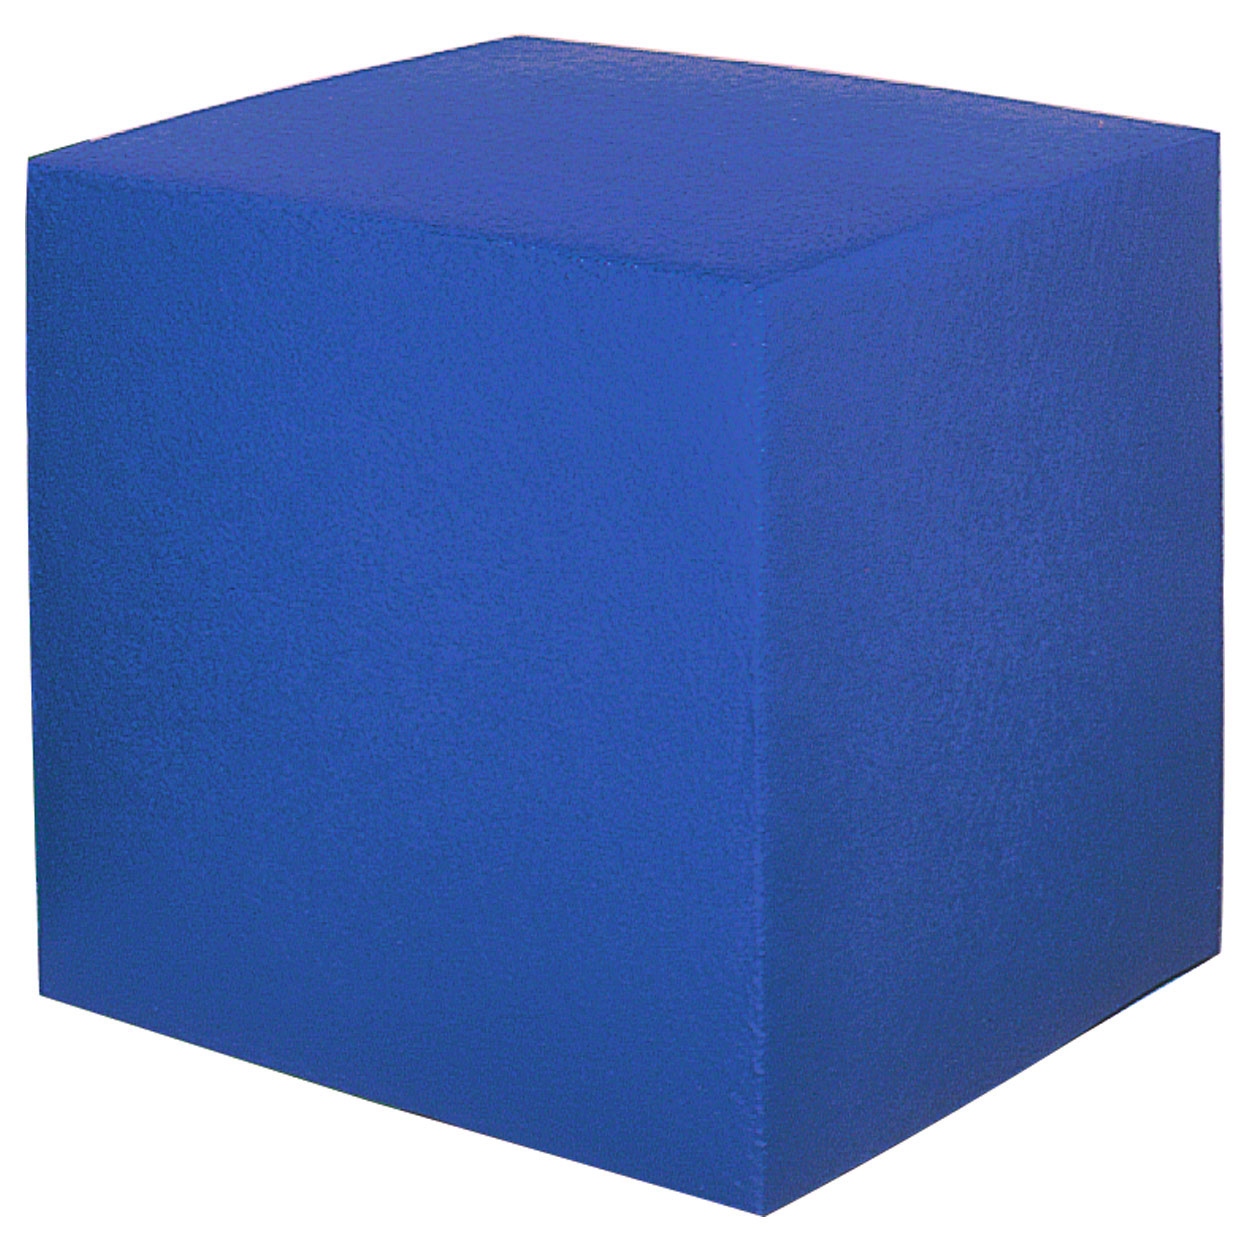 VOLLEY cube, 25x25x25 cm buy online